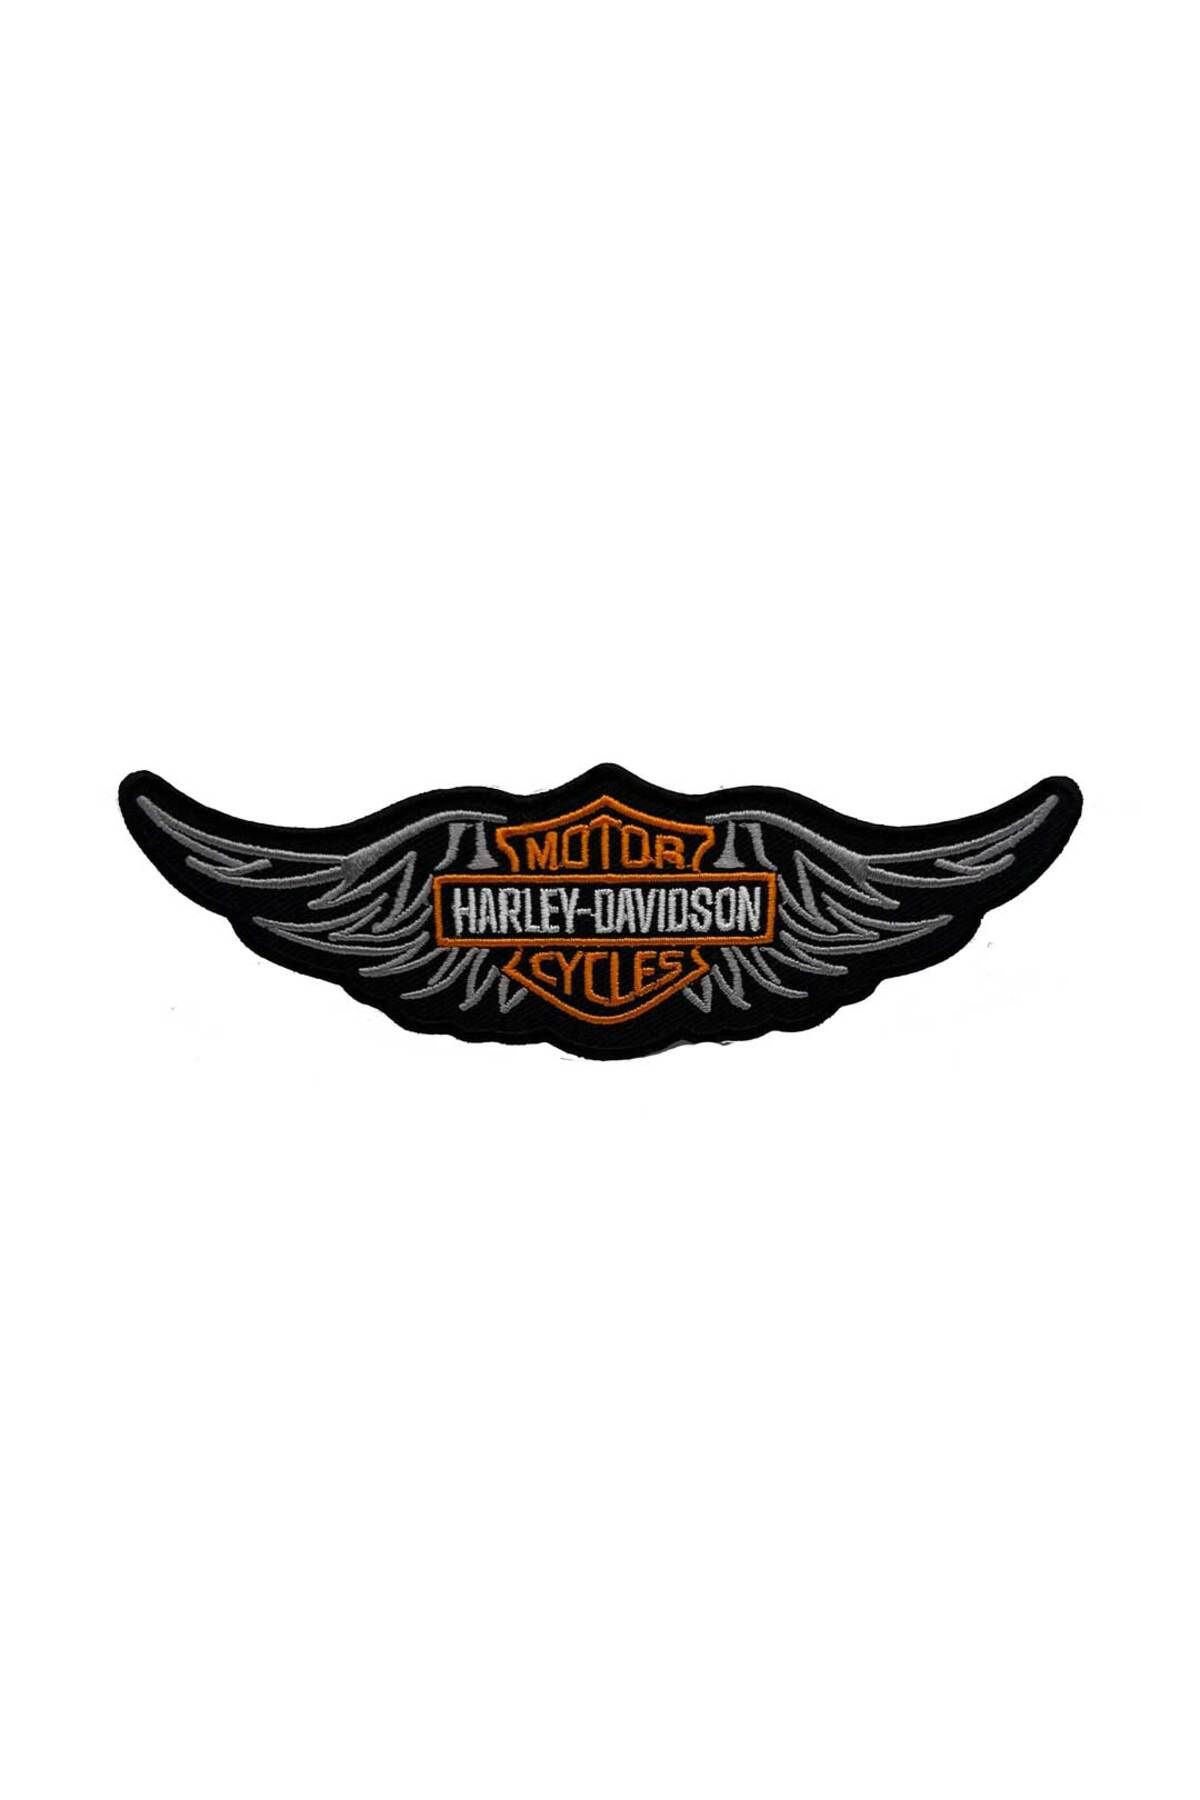 Z zepplin Harley Davidson Wings Patch Yama